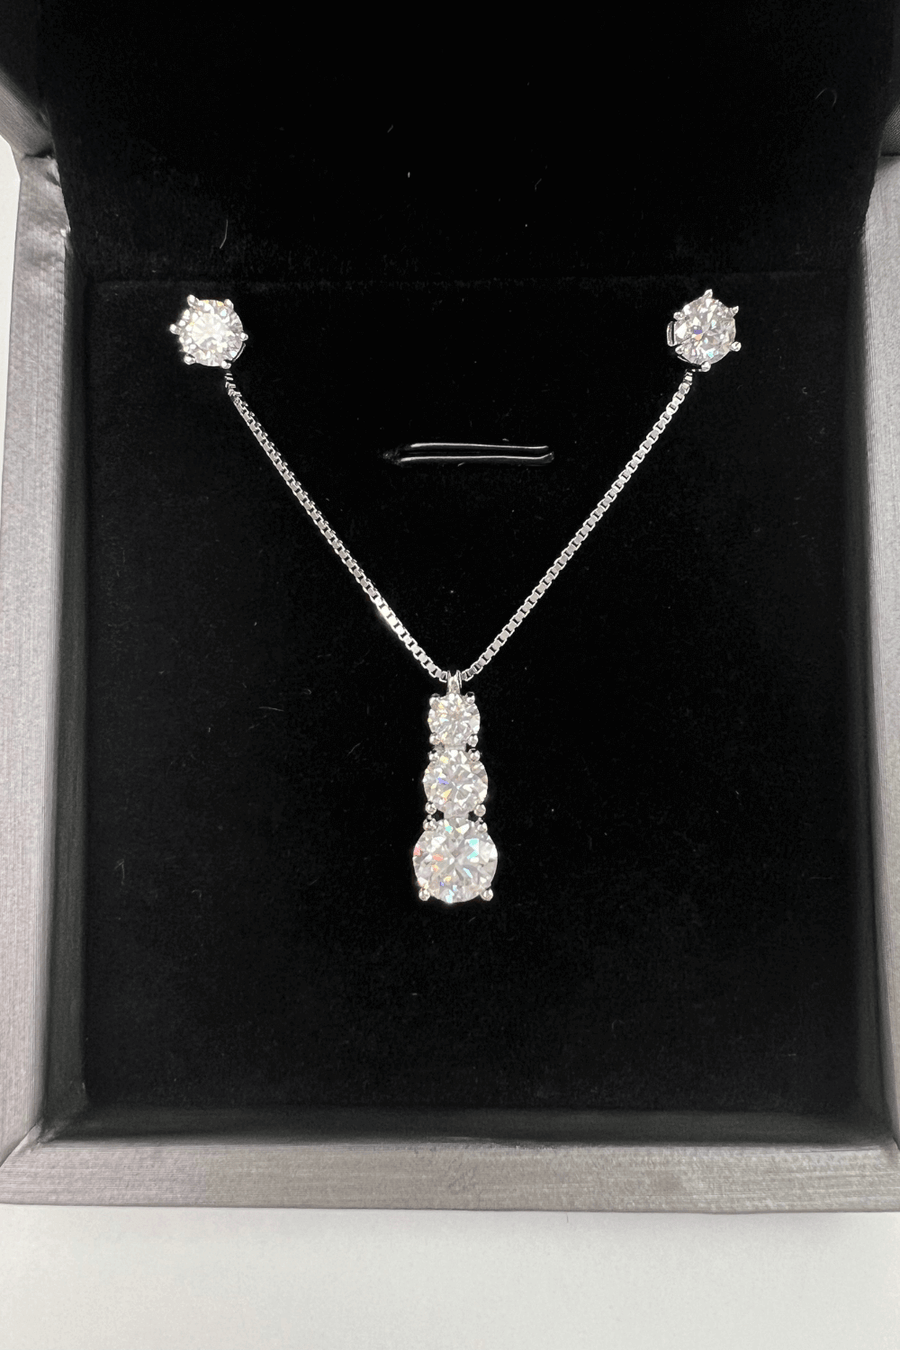 1# BEST Diamond Necklace Earrings Jewelry Bundle Set Gift for Women | #1 Best Most Top Trendy Trending  Diamond Necklace, Earrings Jewelry Gift for Women, Mother, Wife, Daughter, Ladies | MASON New York